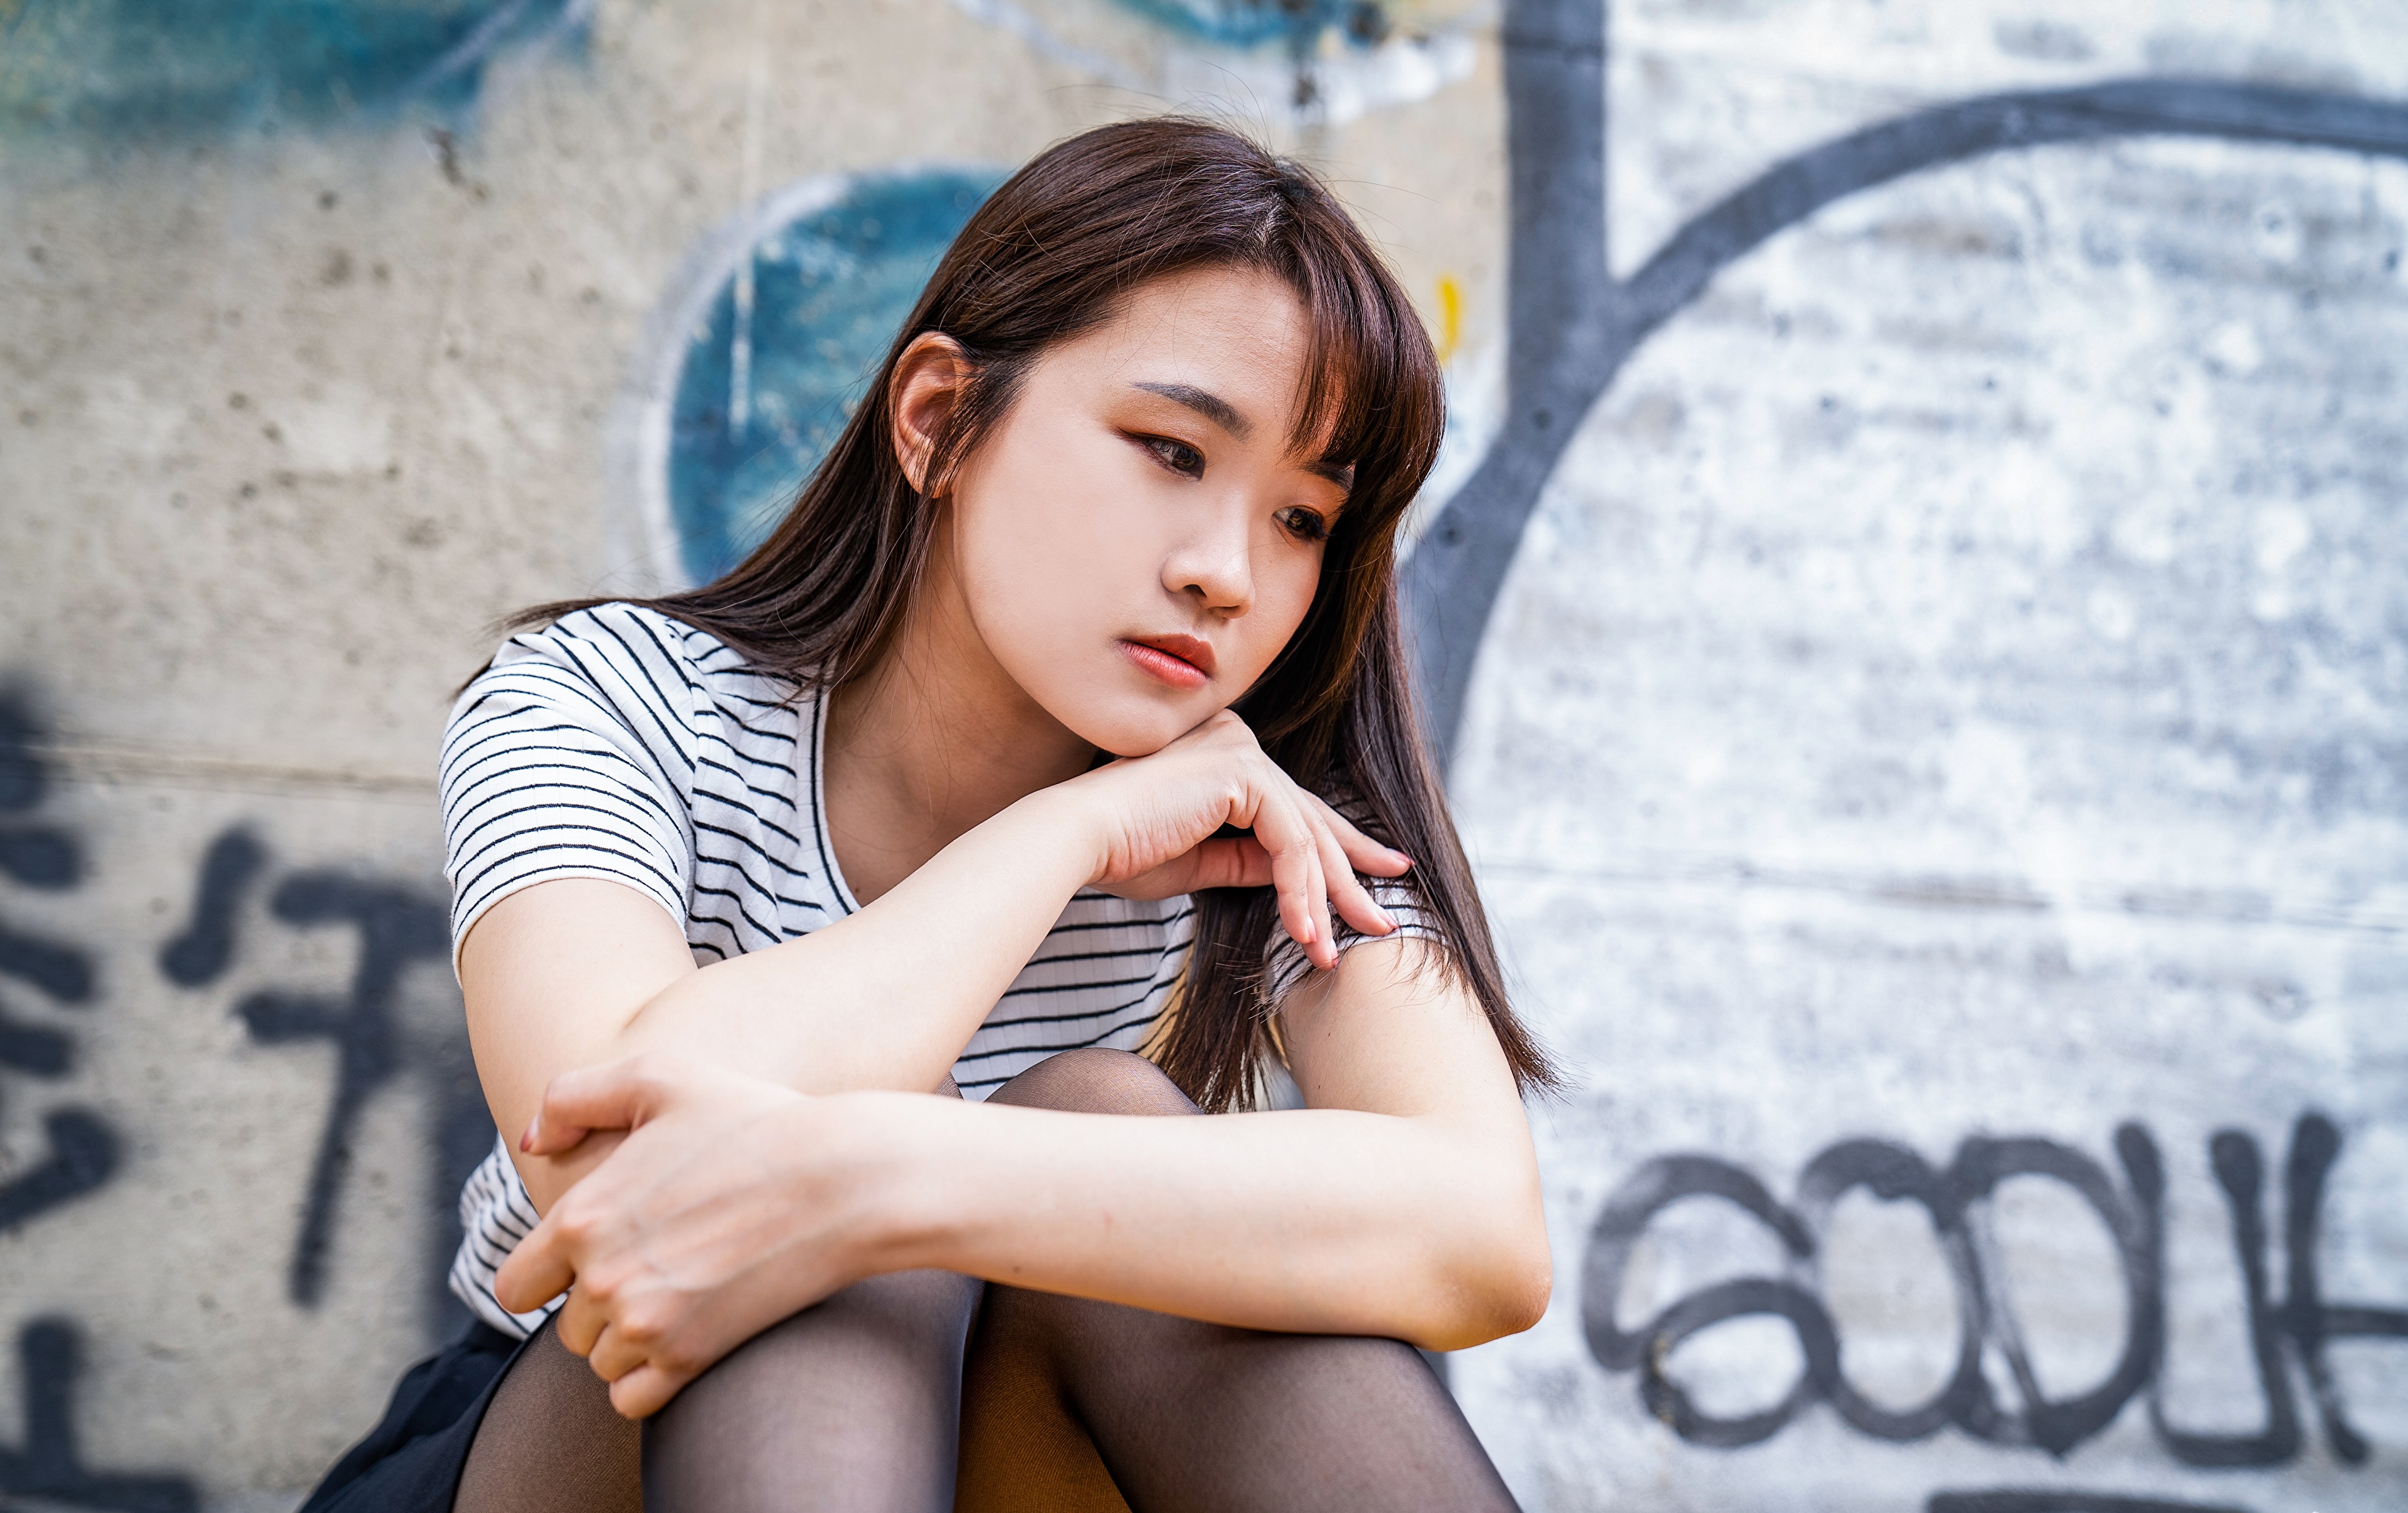 Asian Model Women Long Hair Dark Hair Wall Graffiti Sitting Nylons Striped Shirt Depth Of Field Skir 3840x2413